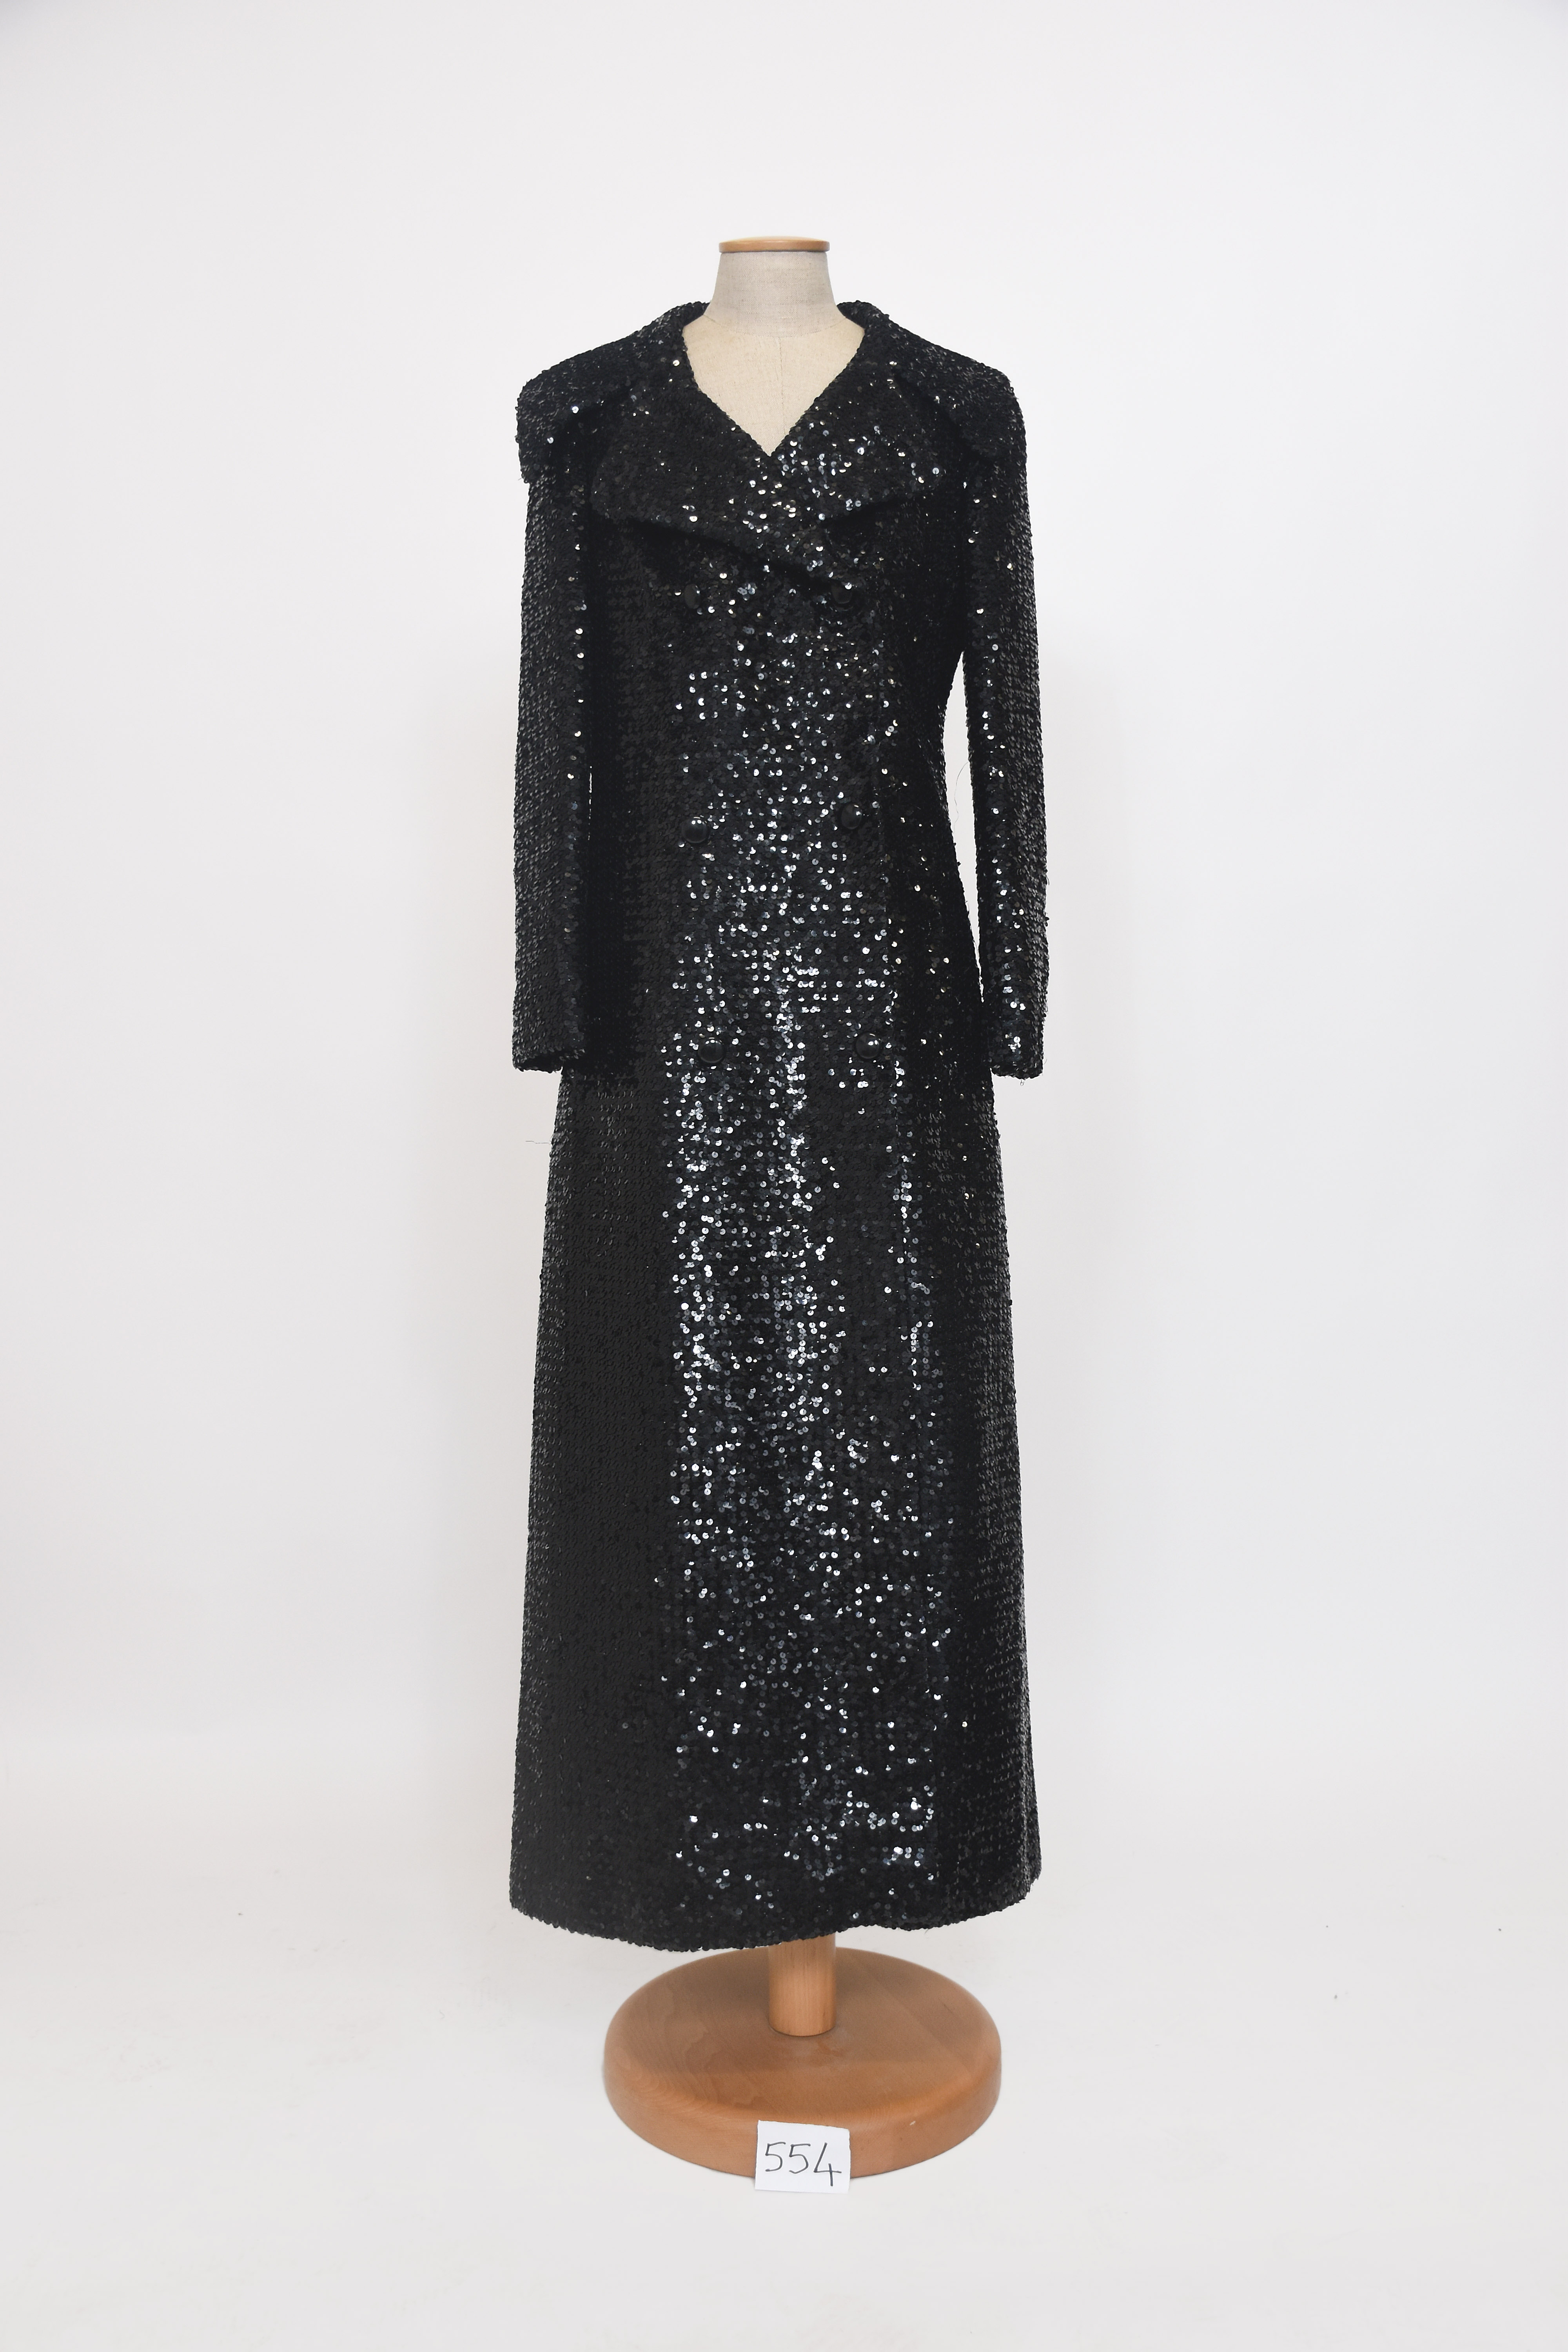 cappotto, civile, da sera, femminile - manifattura torinese (anni sessanta sec. XX)